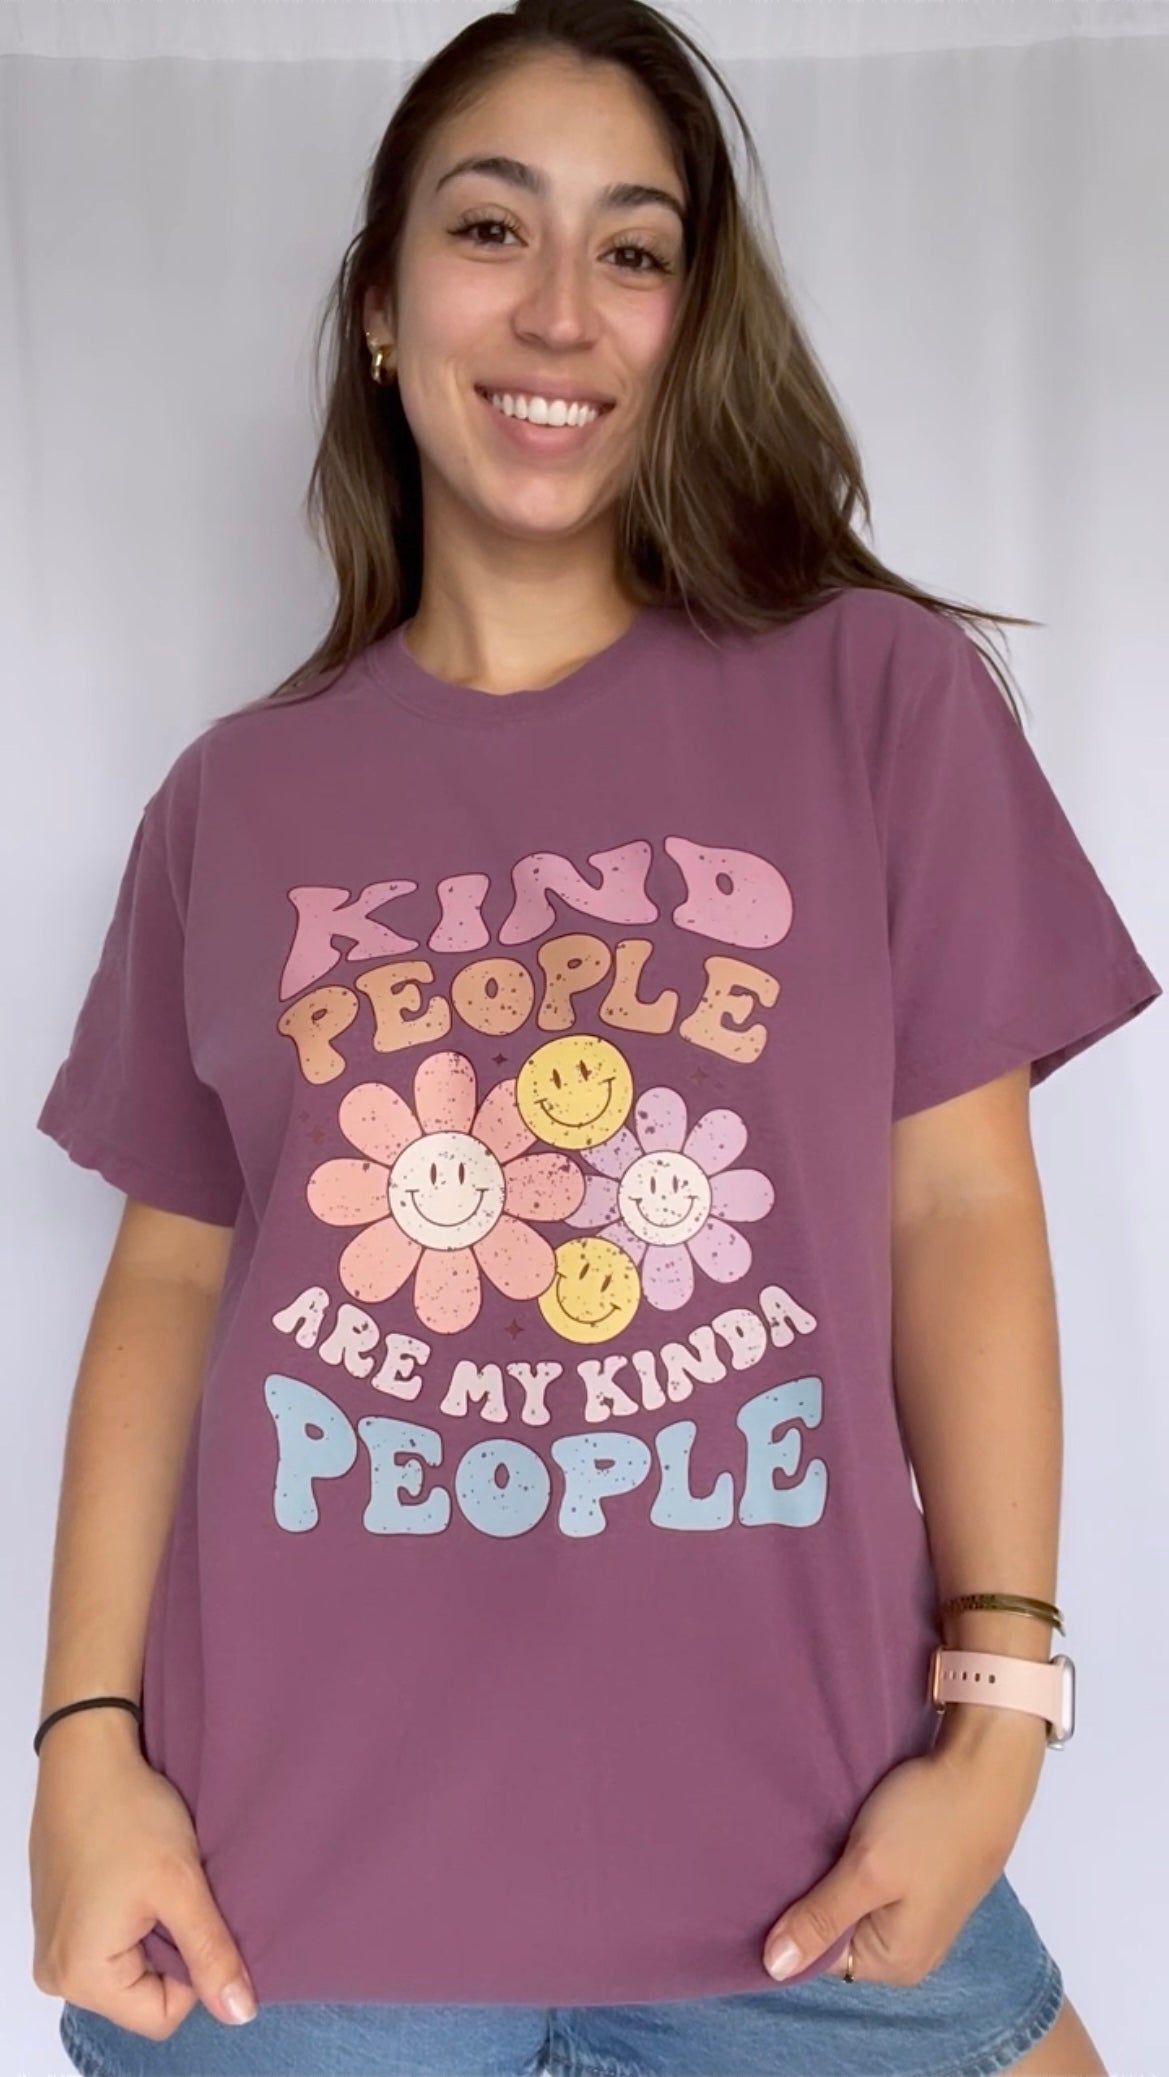 Kind People T-Shirt